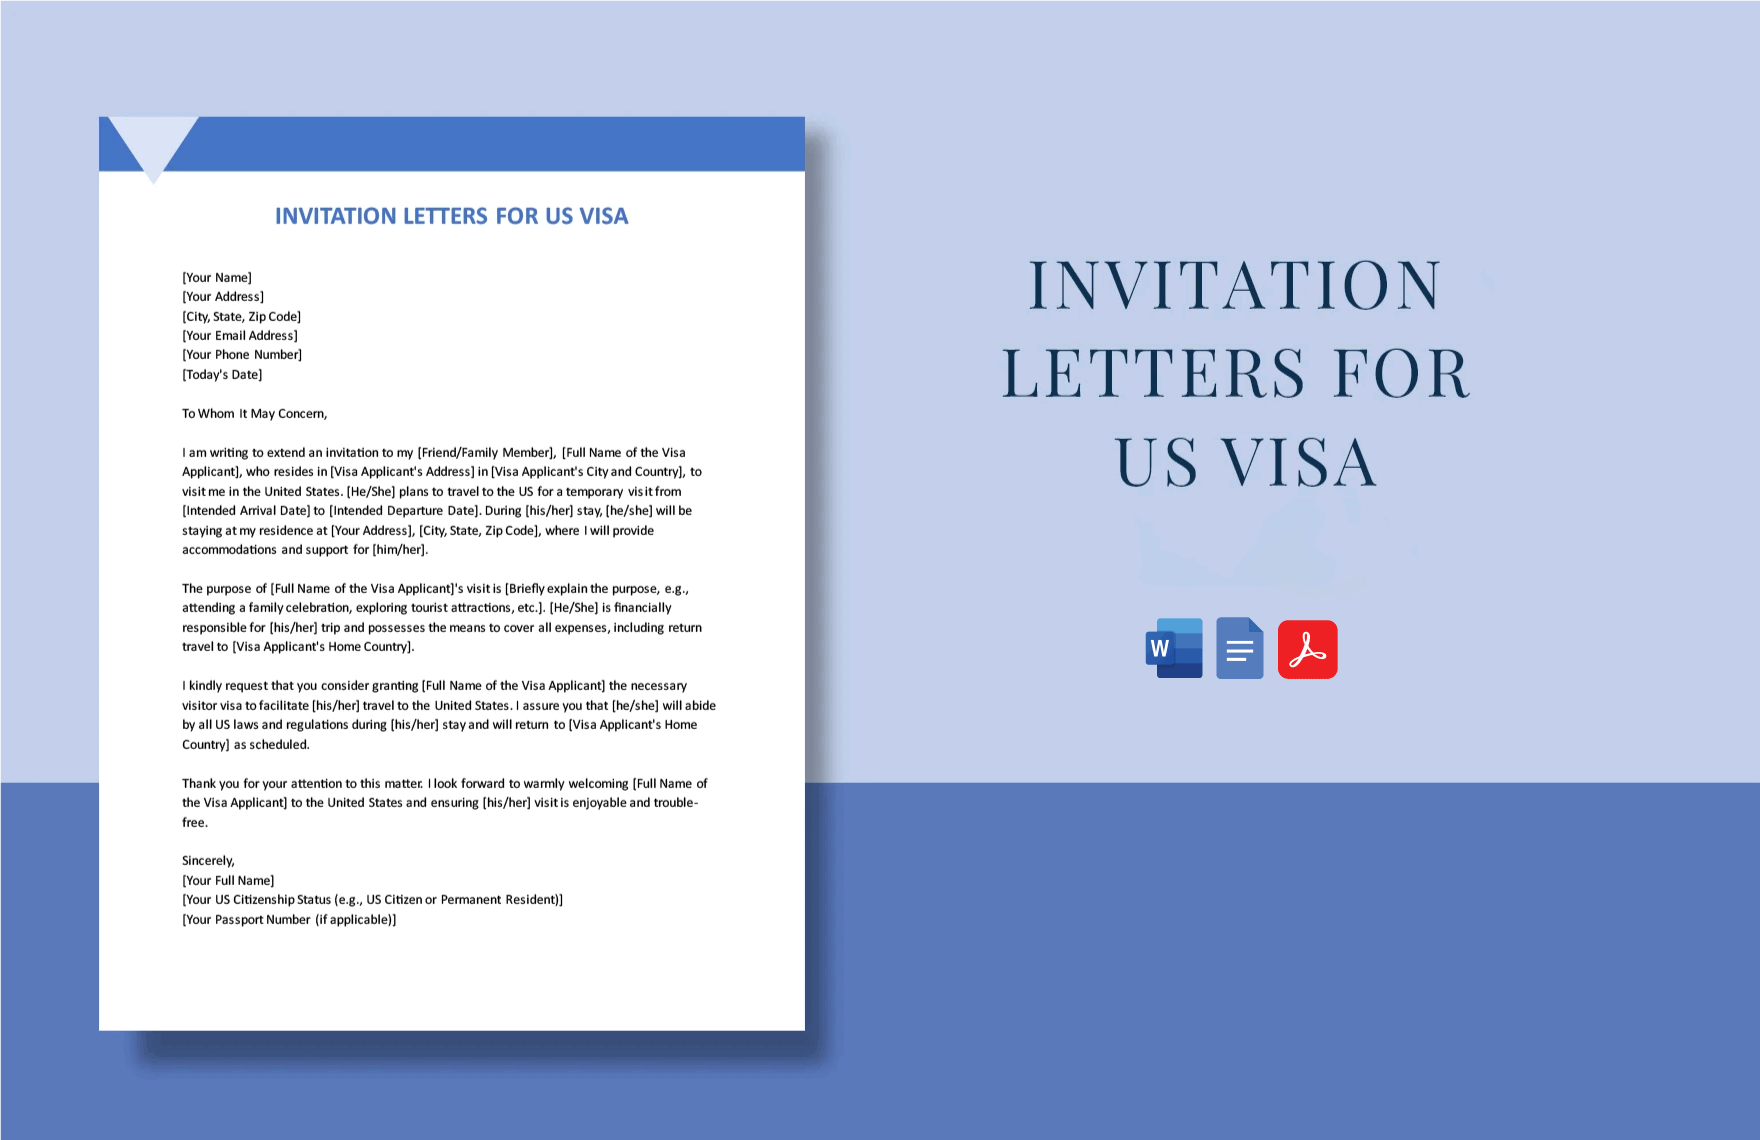 Invitation Letters For US Visa